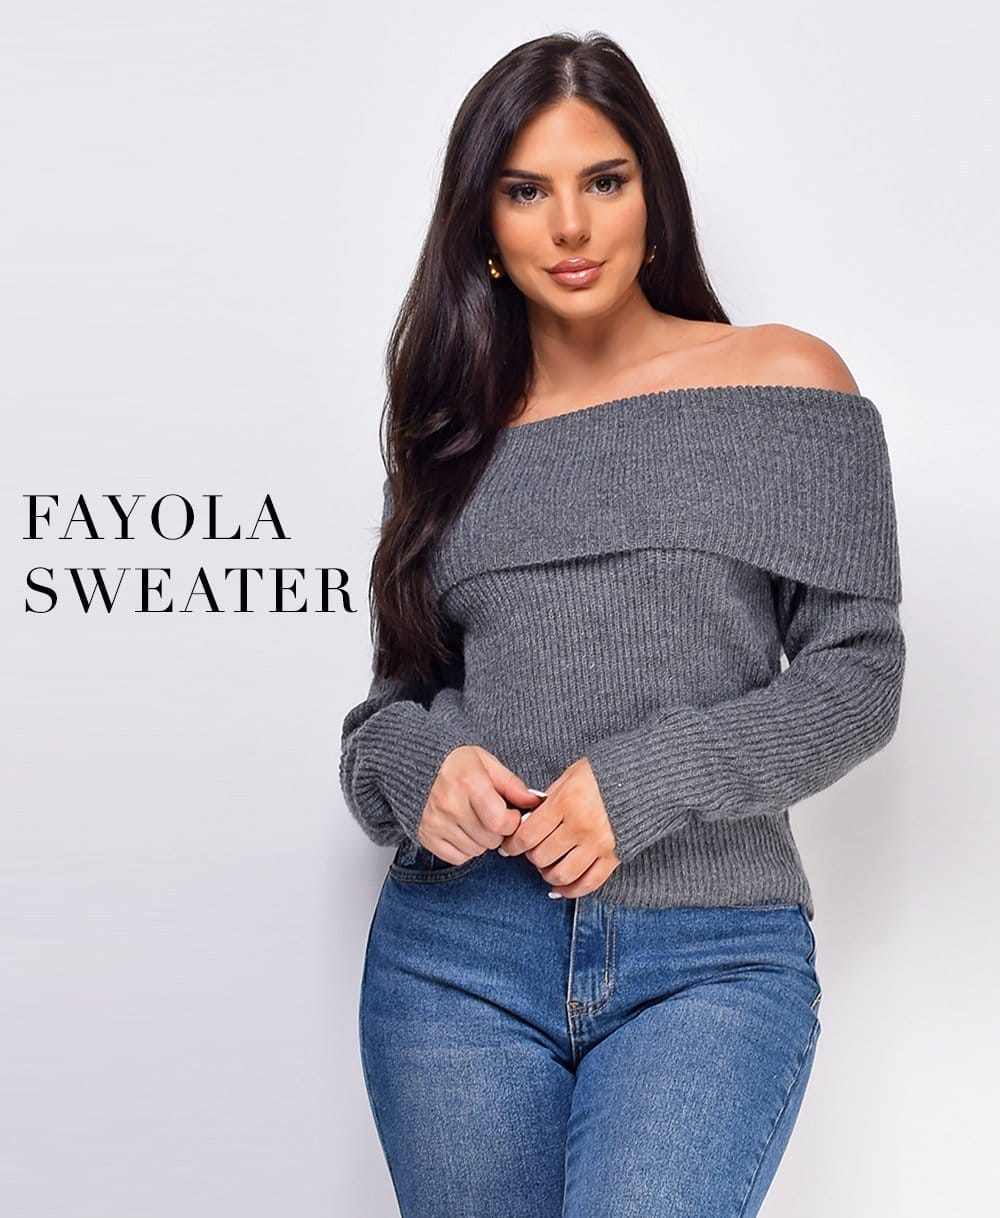 Fayola Sweater